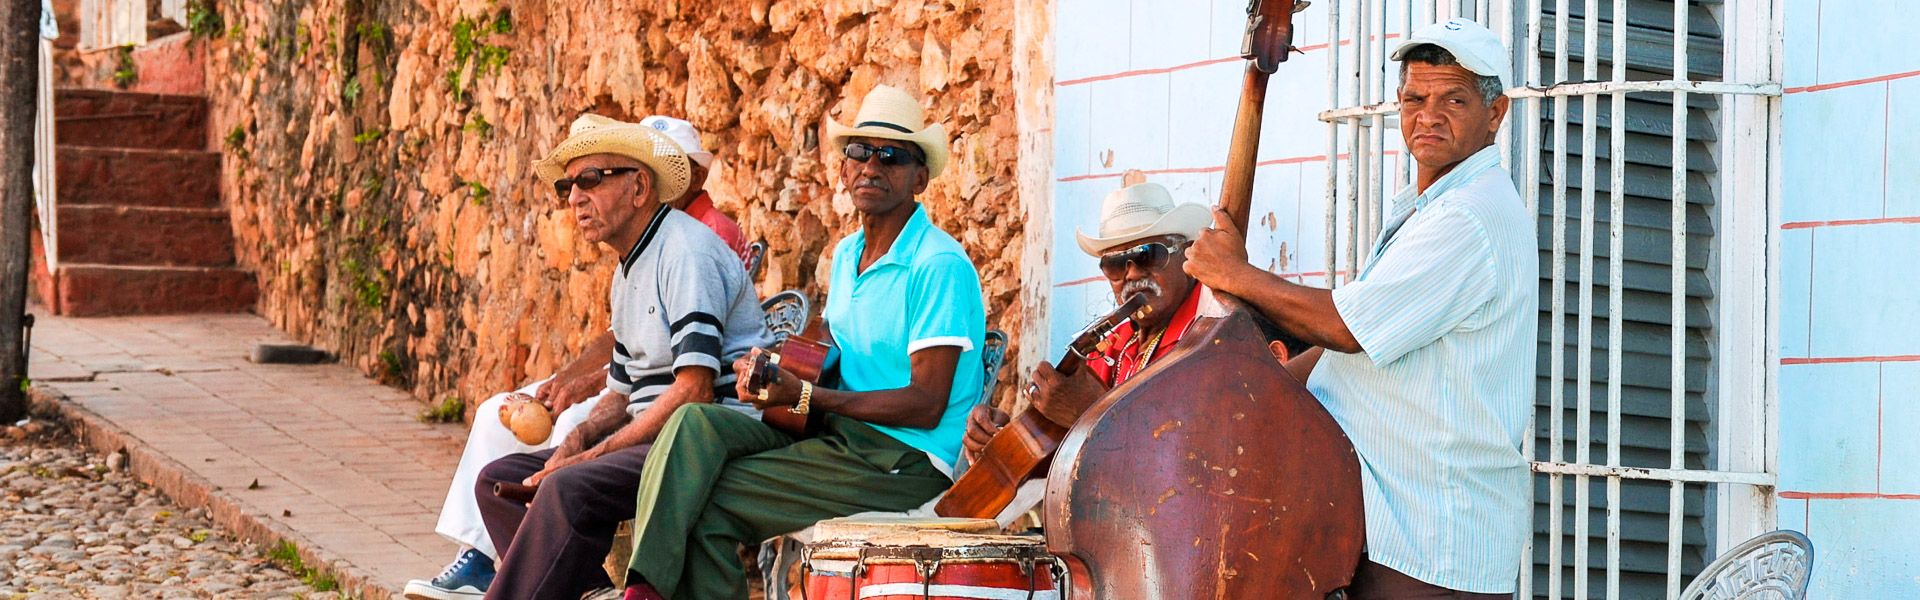 Straenmusiker |  Toni Bauer, Cuba Real Tours / Chamleon